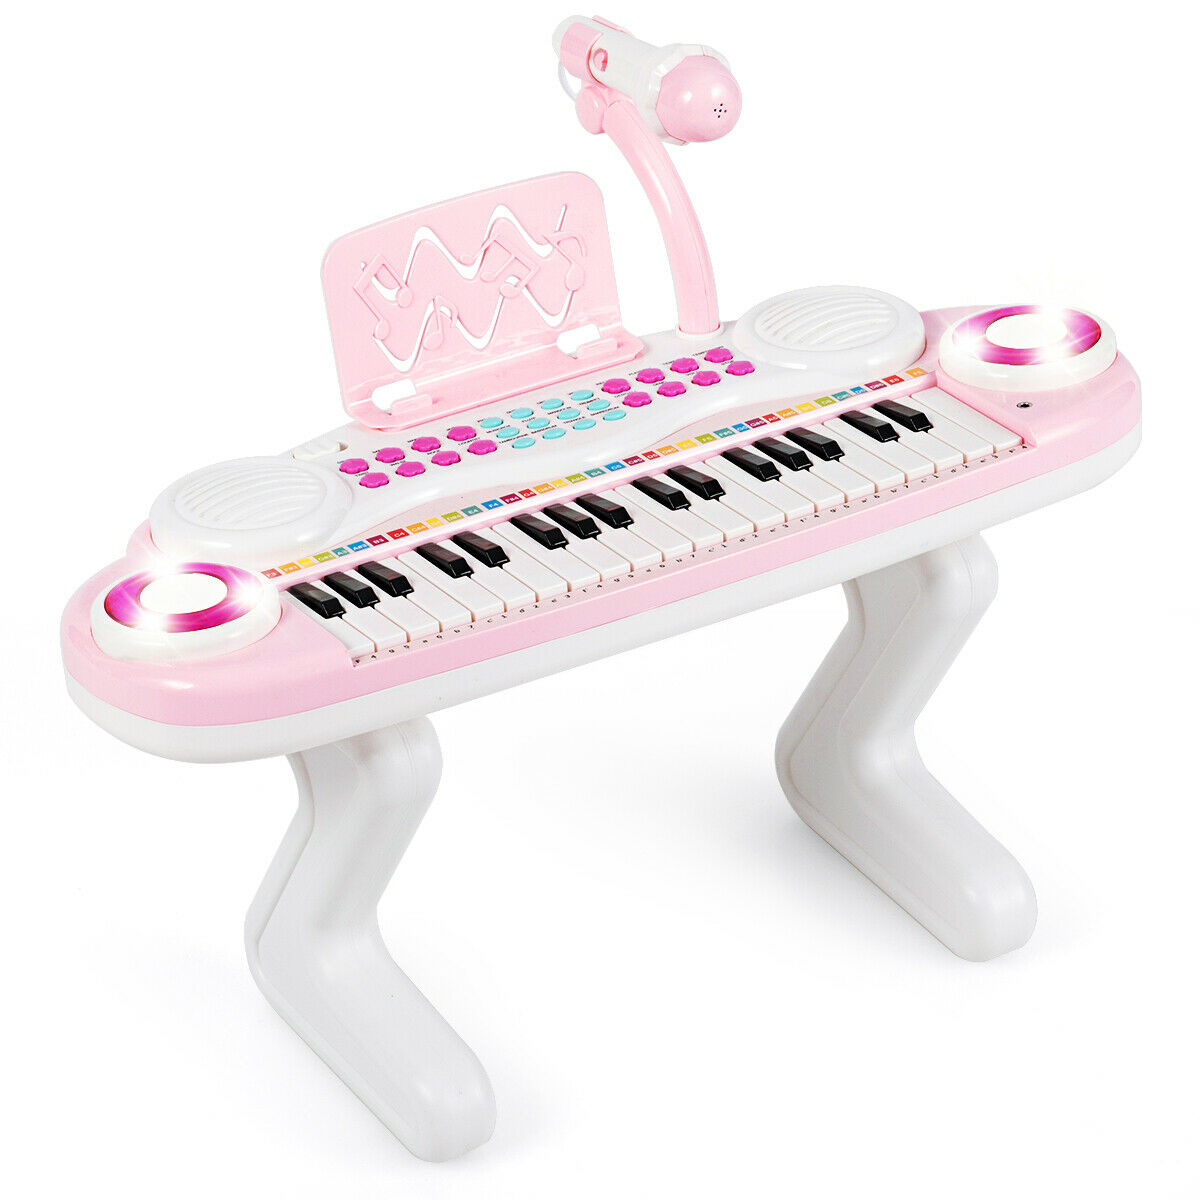 Z-Shaped Kids Toy Keyboard 37-Key Electronic Piano - Blue